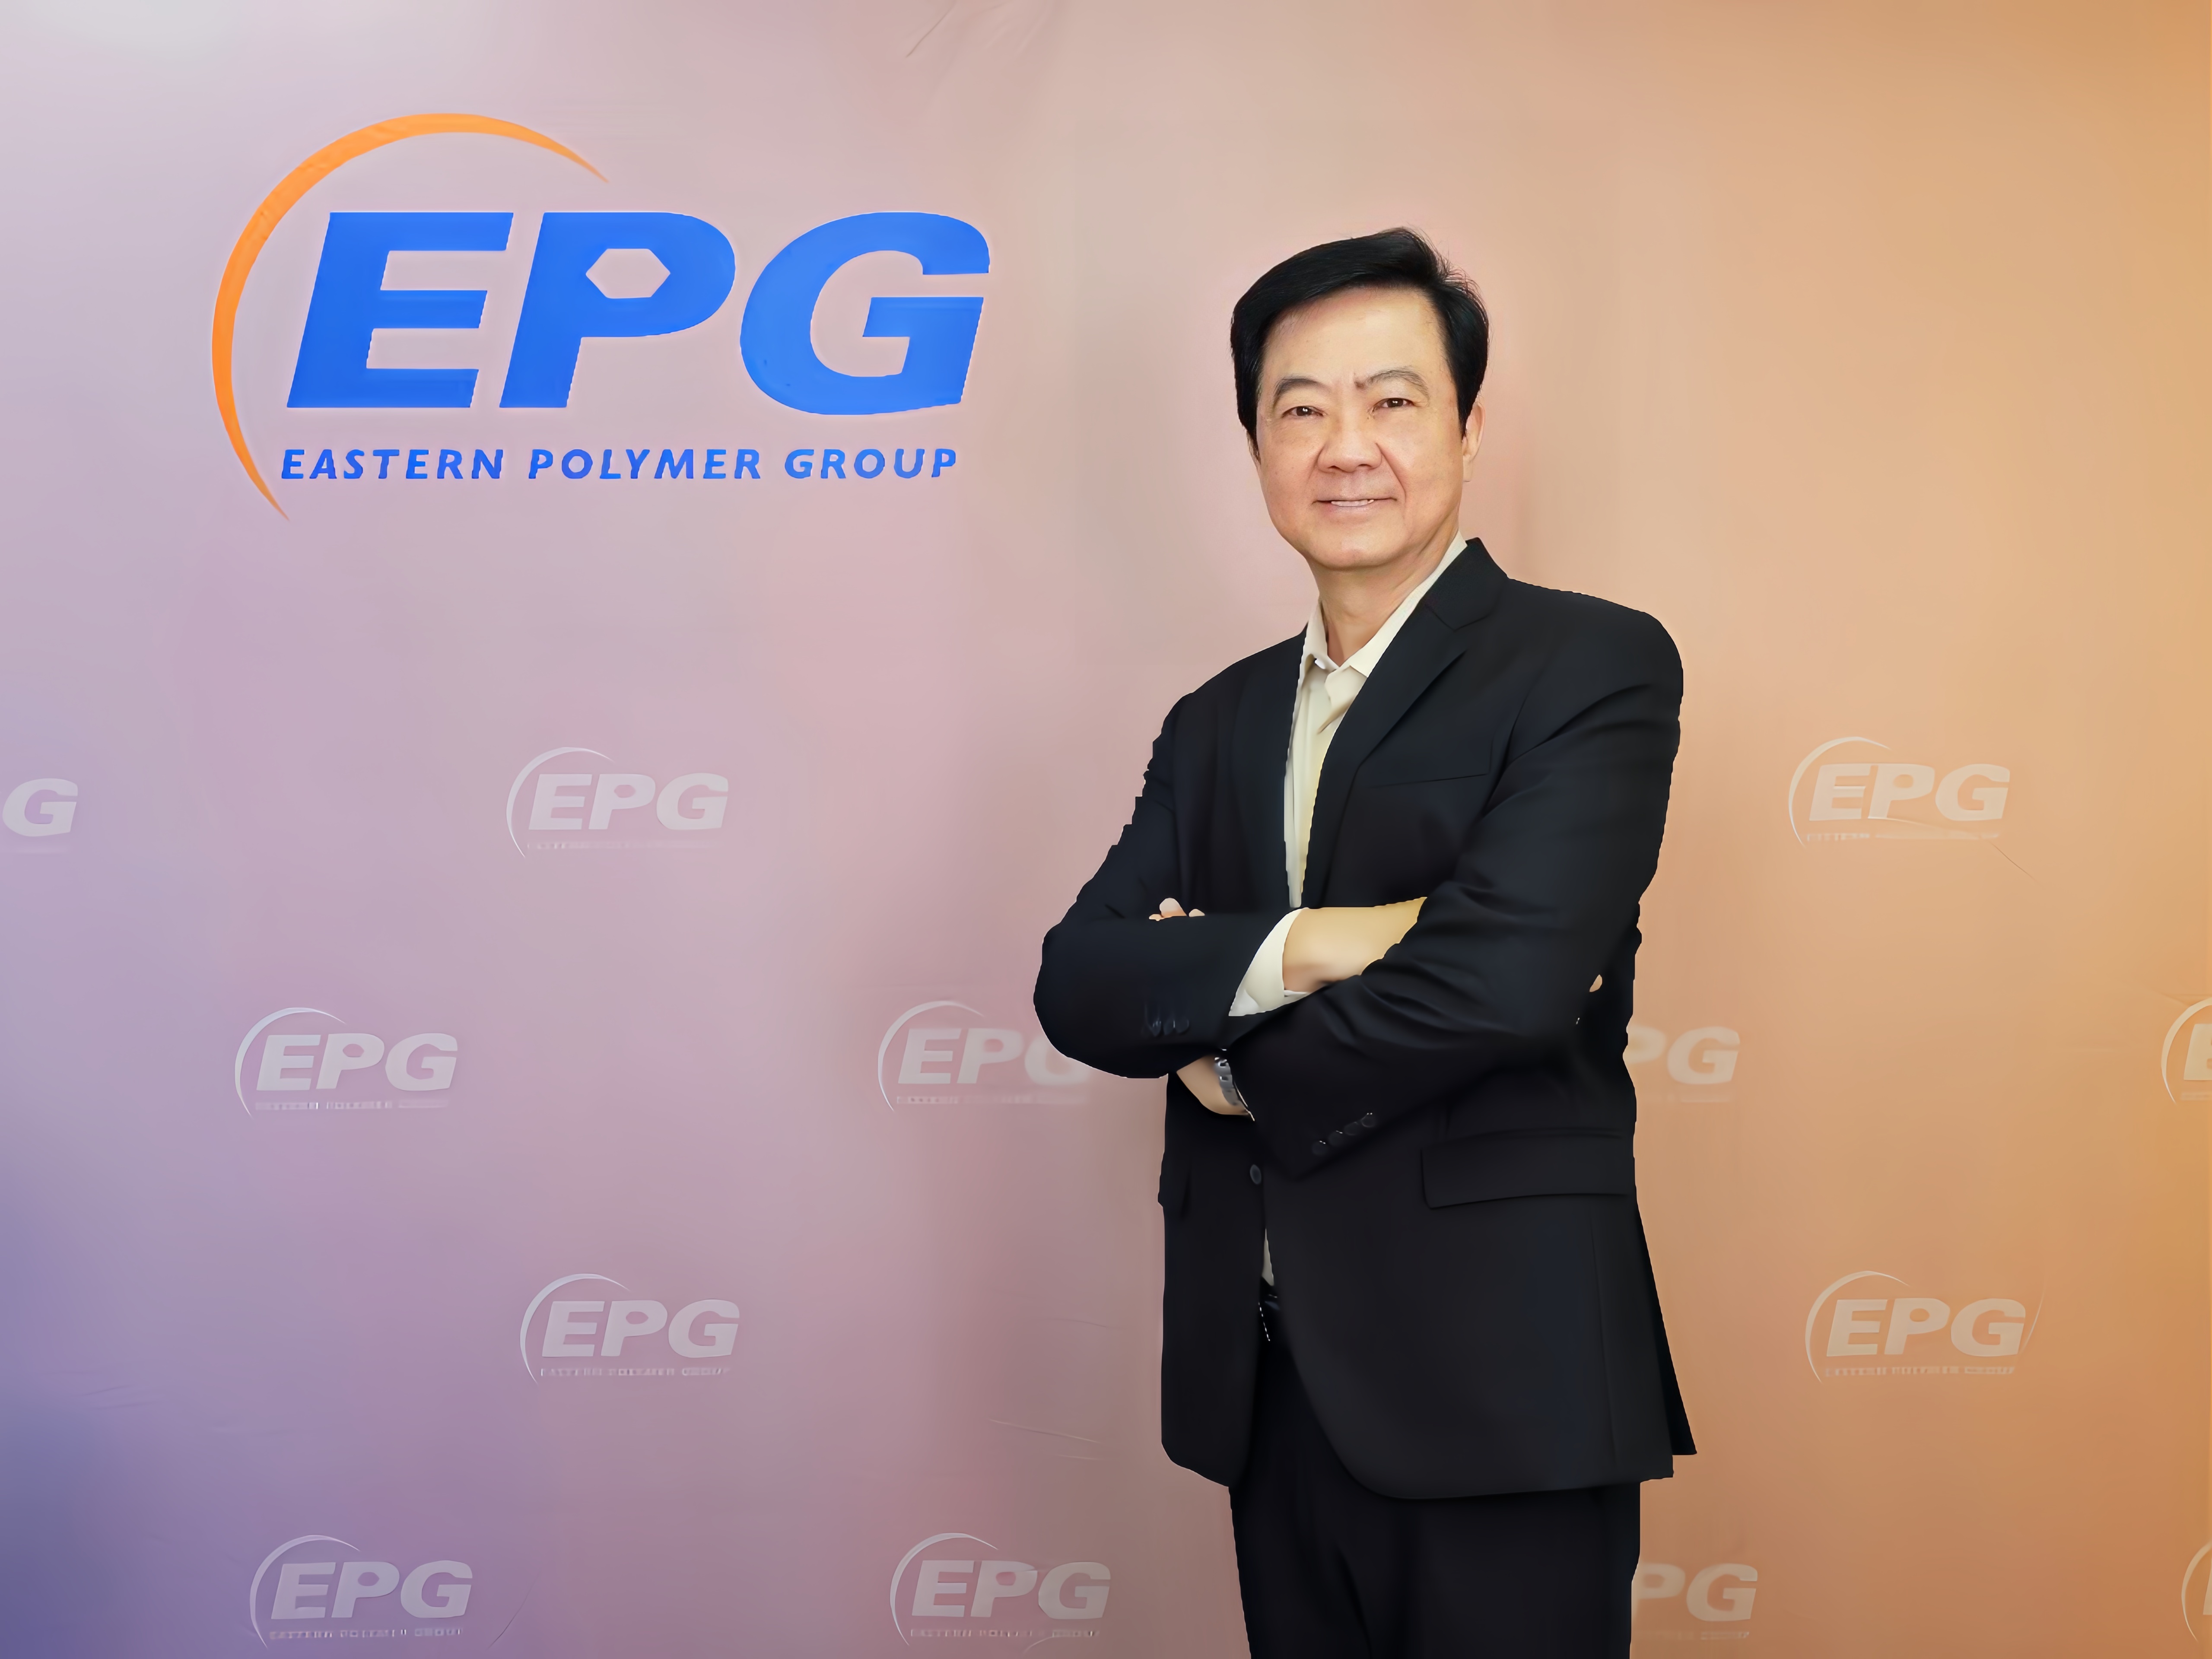 EPG ประกาศงบปีบัญชี 66/67 ยอดขาย 13,170 ล้านบาท เพิ่มขึ้น 9%